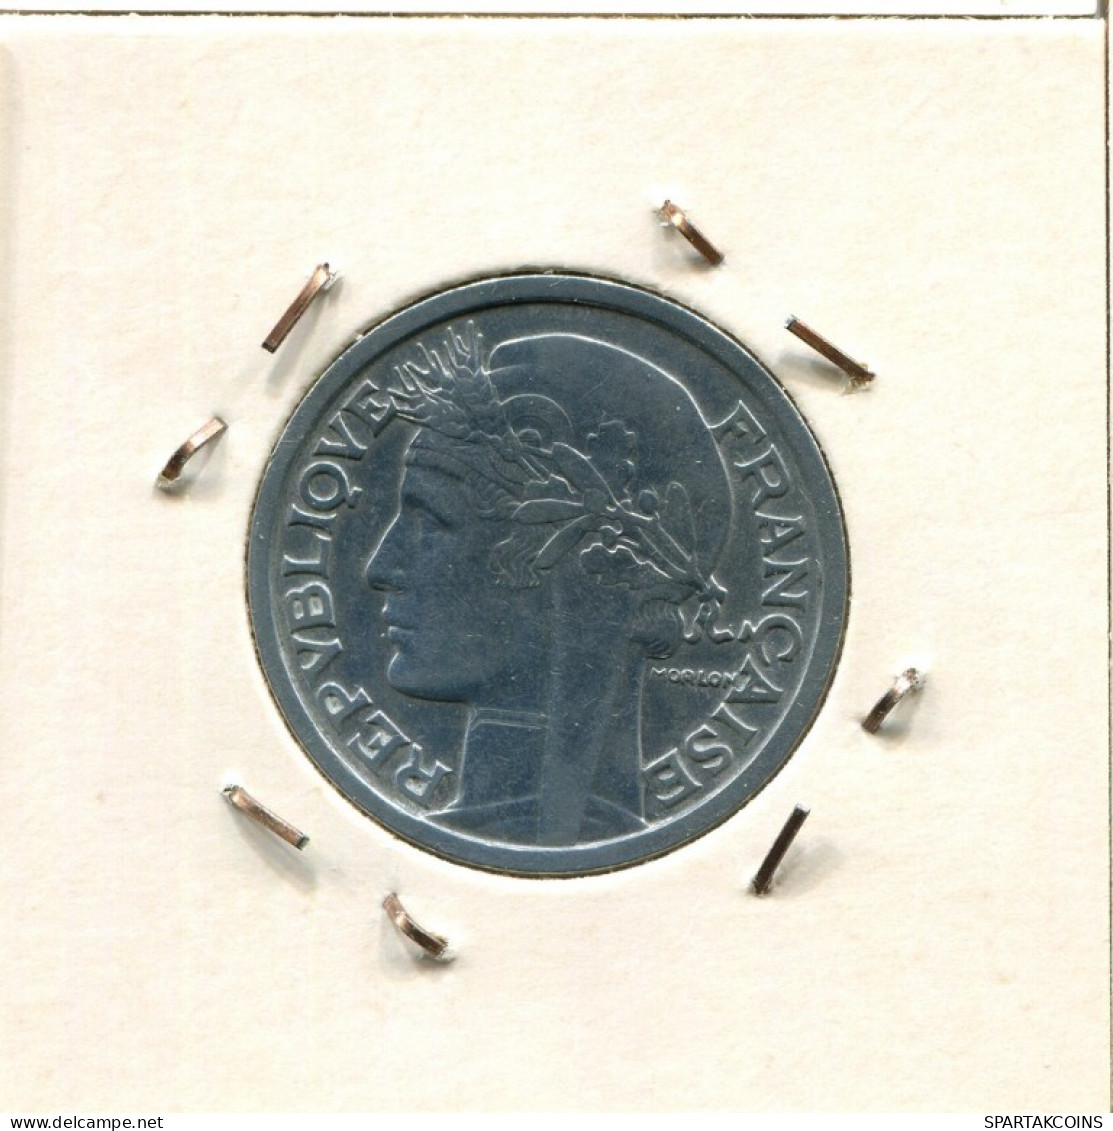 2 FRANCS 1947 FRANCE French Coin #AM345.U.A - 2 Francs